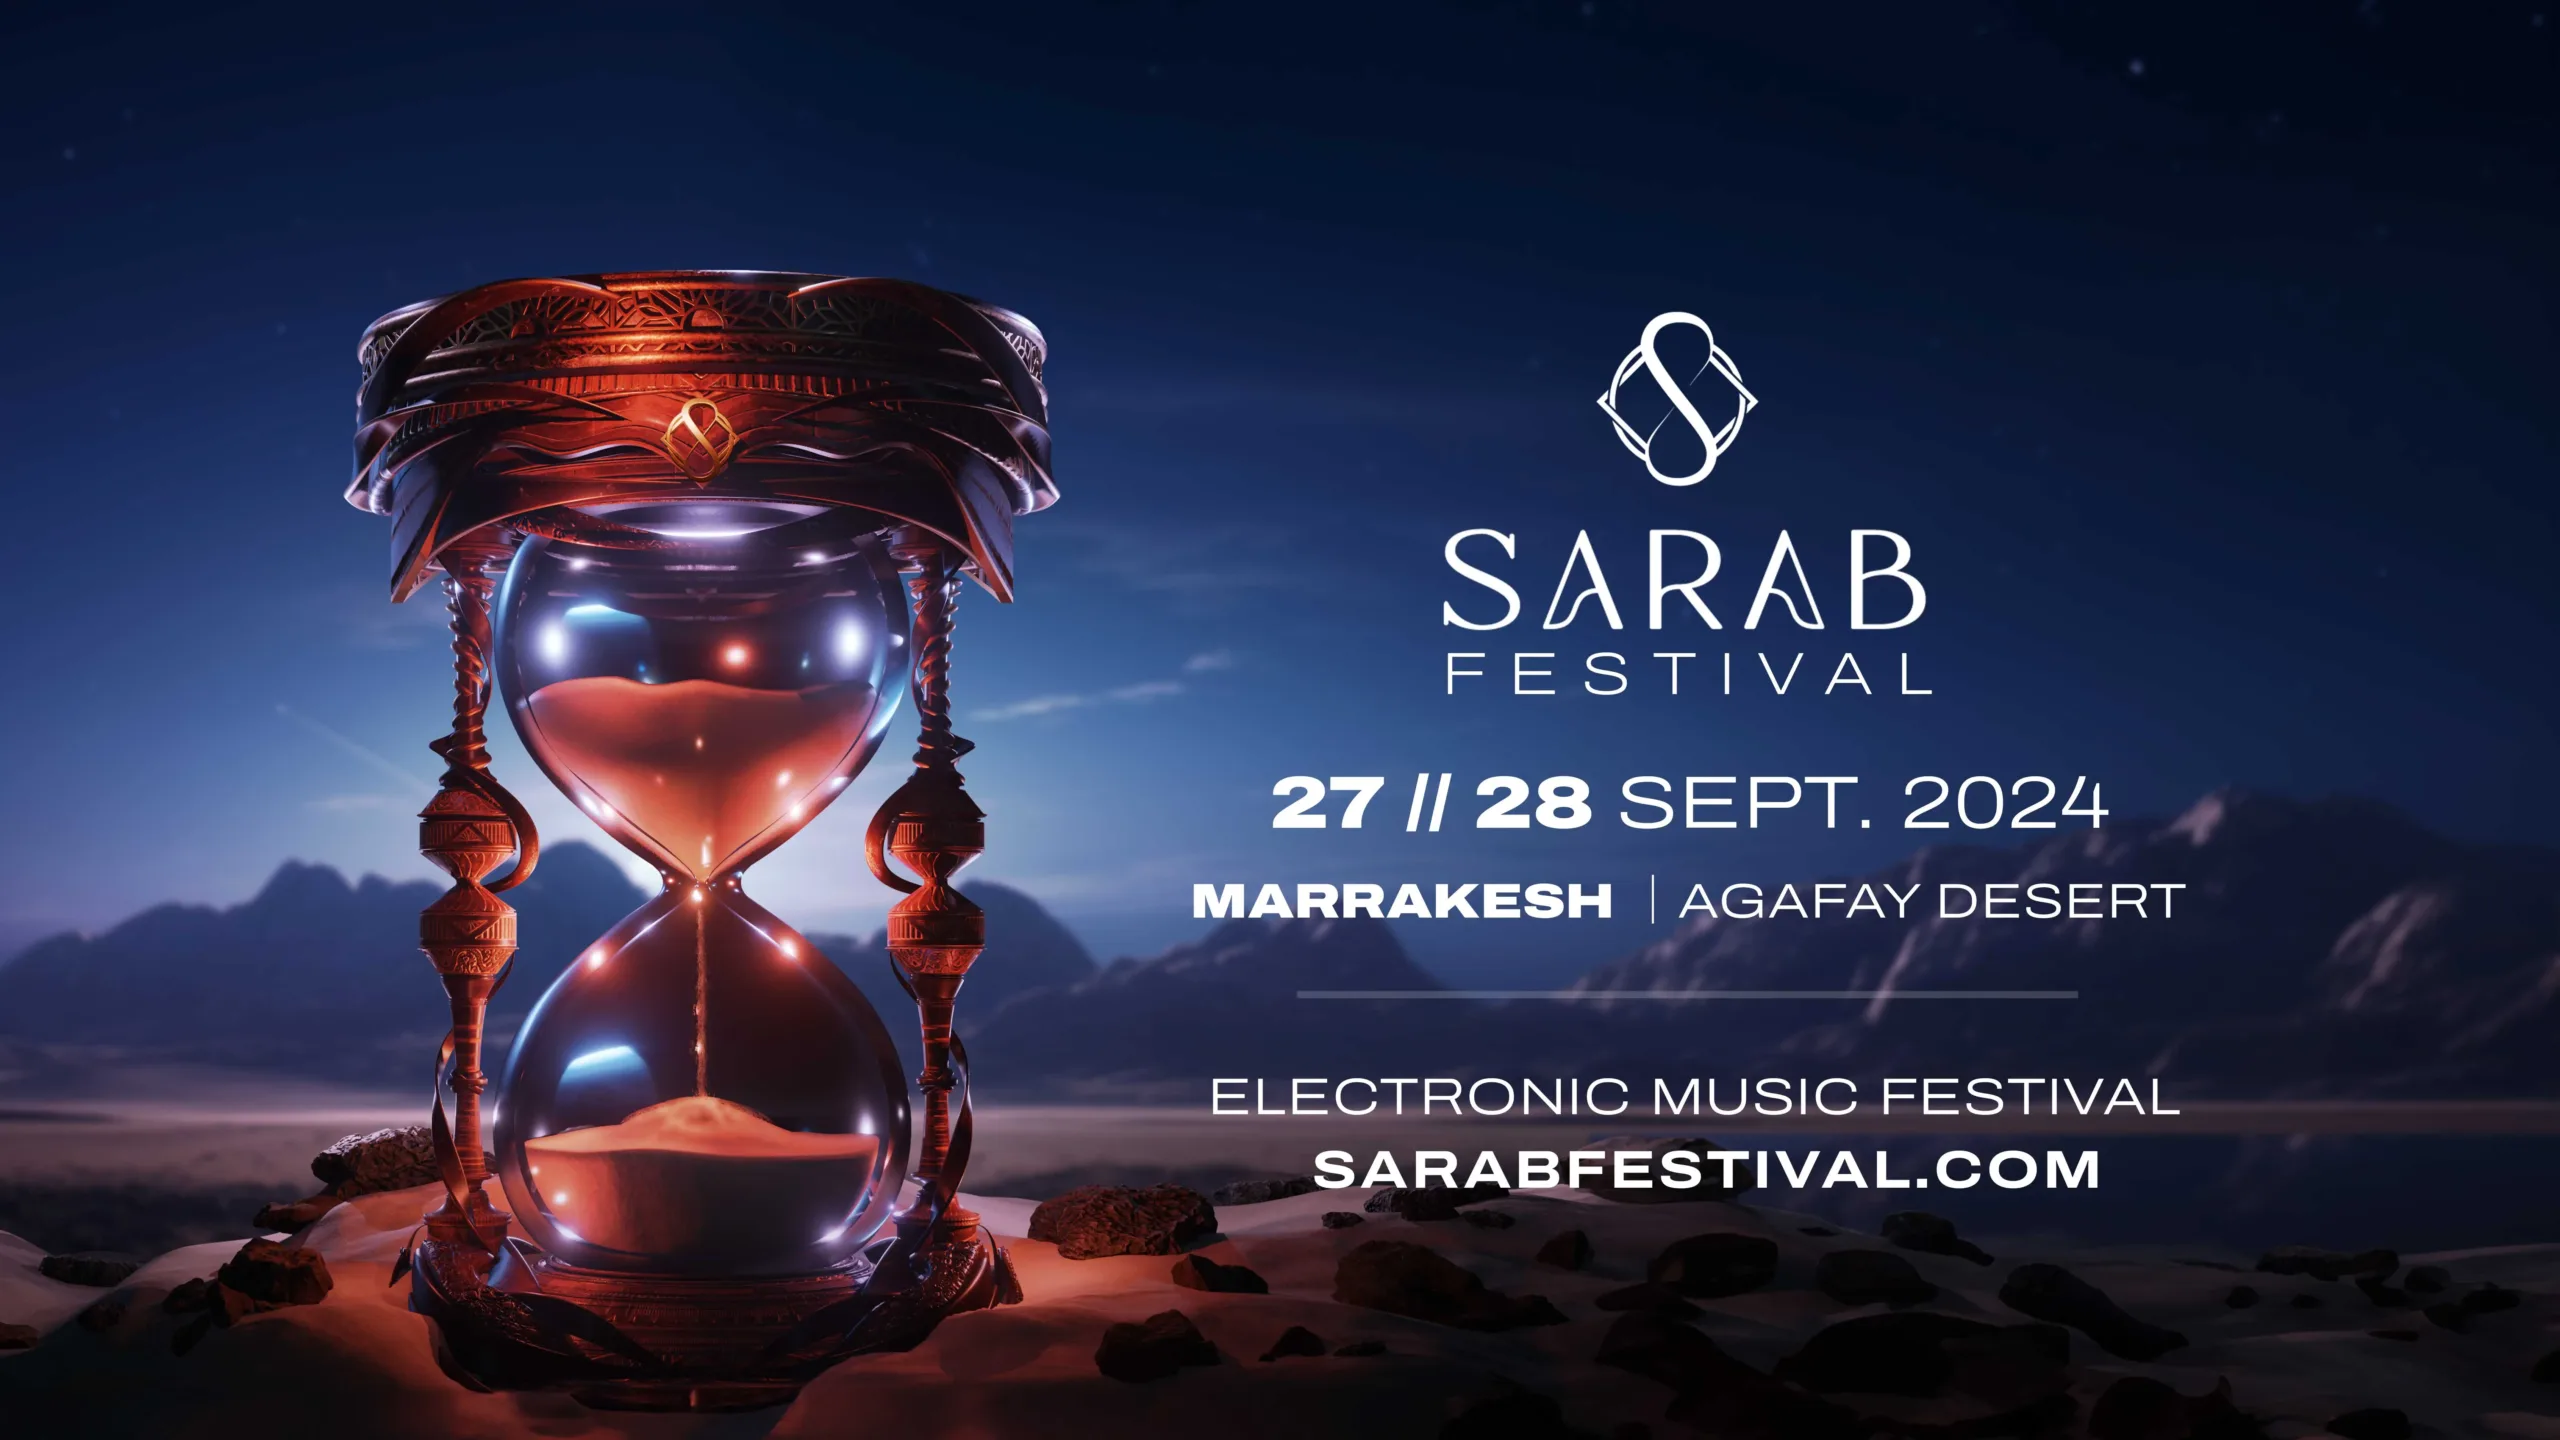 sarab festival marrakech agafay desert